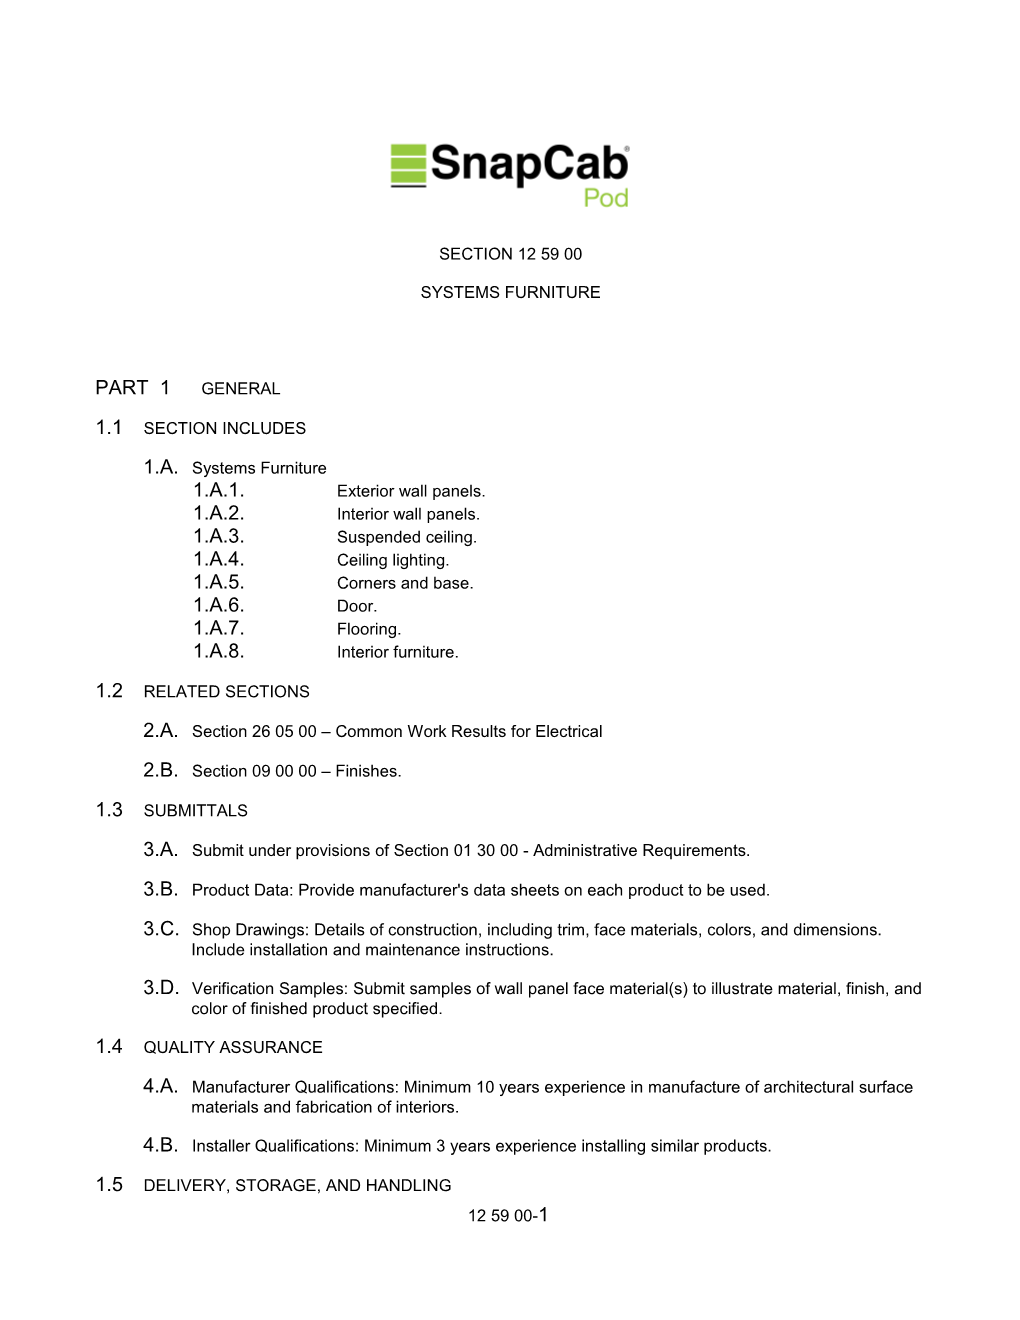 Snapcab Pod Specification